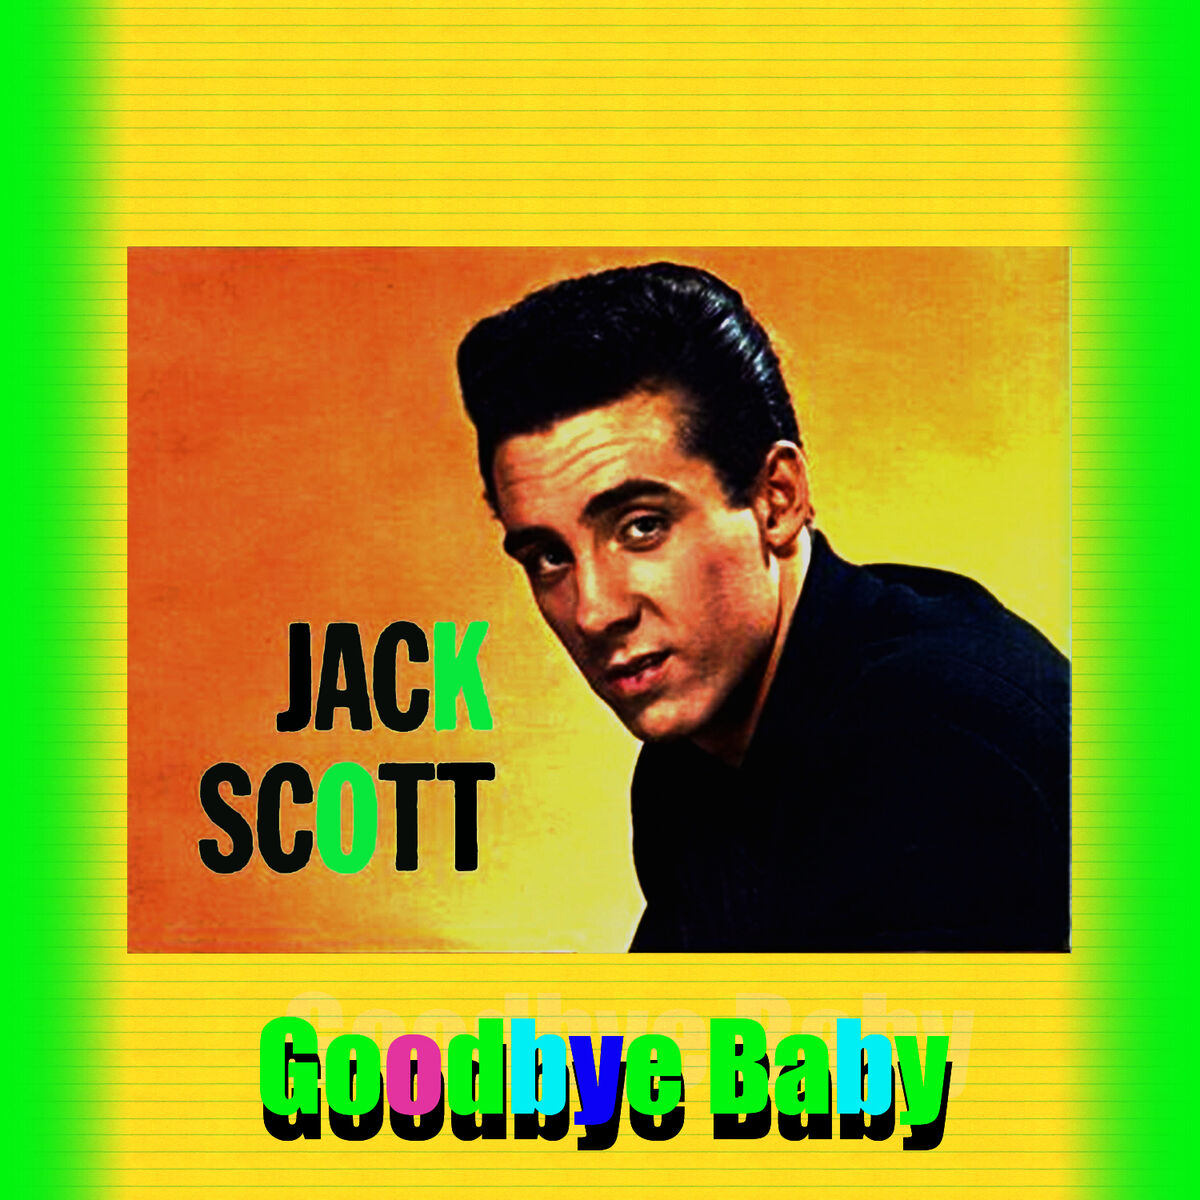 Jack Scott: albums